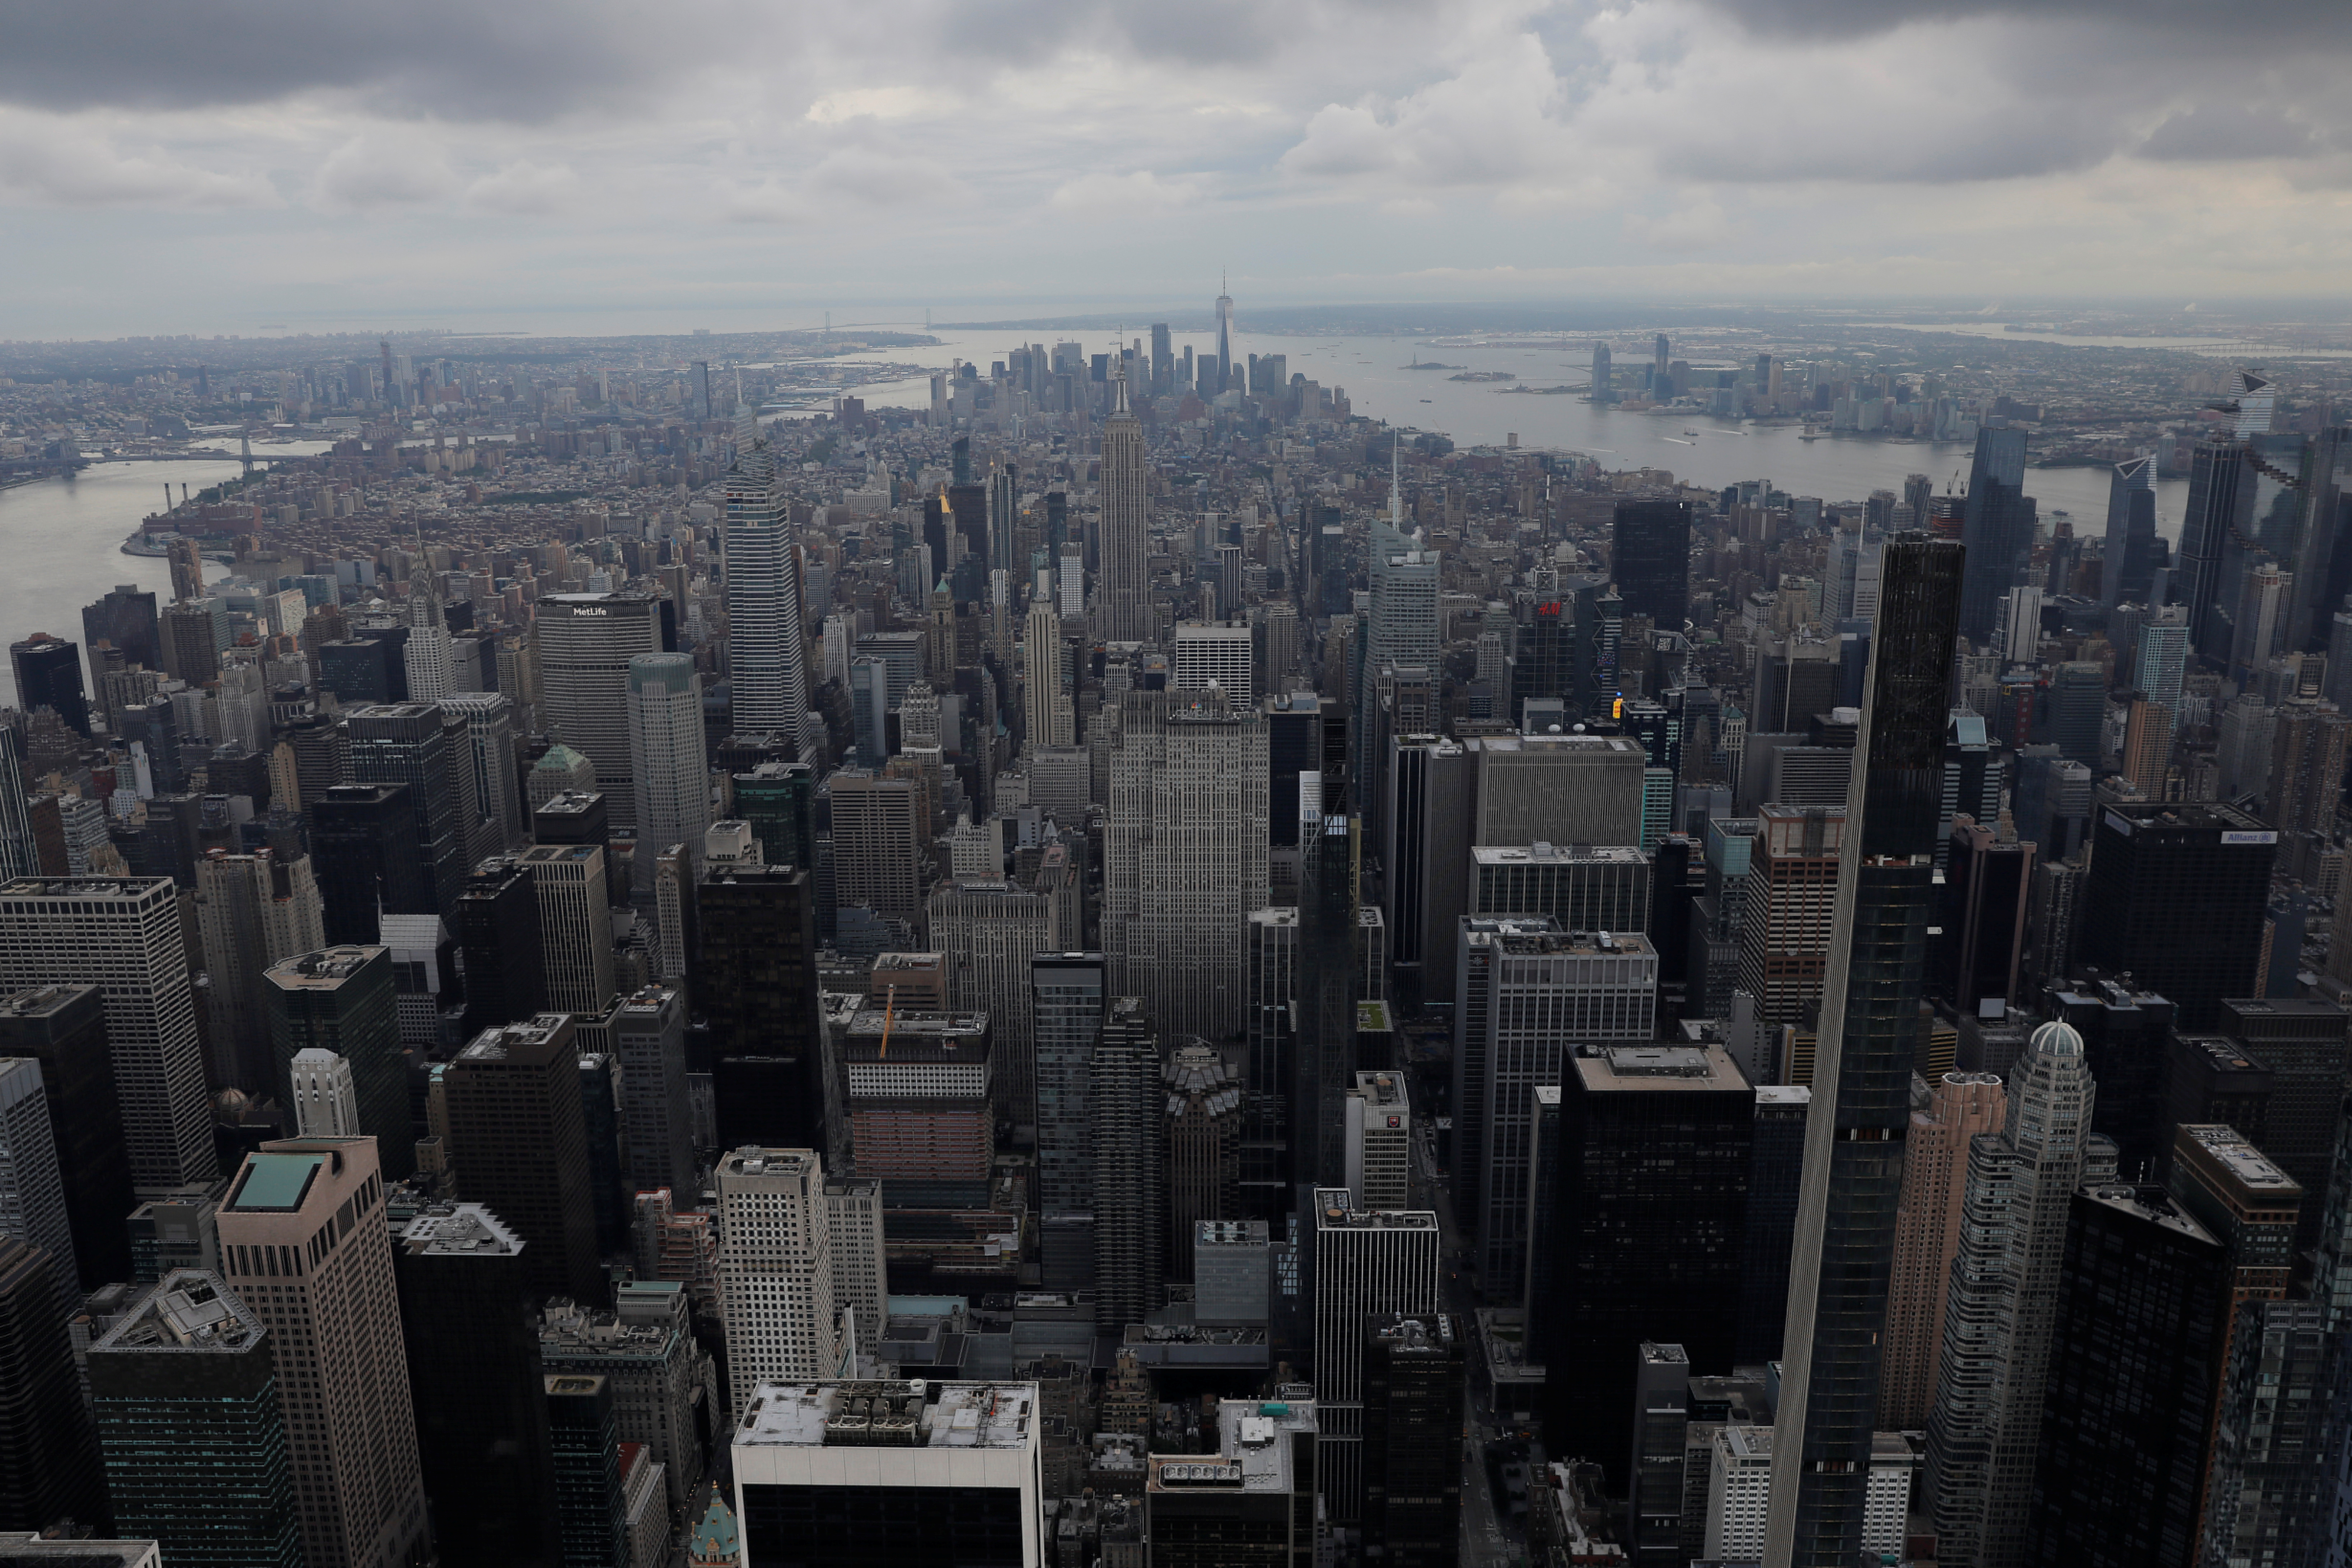 The skyline is seen in Manhattan, New York City